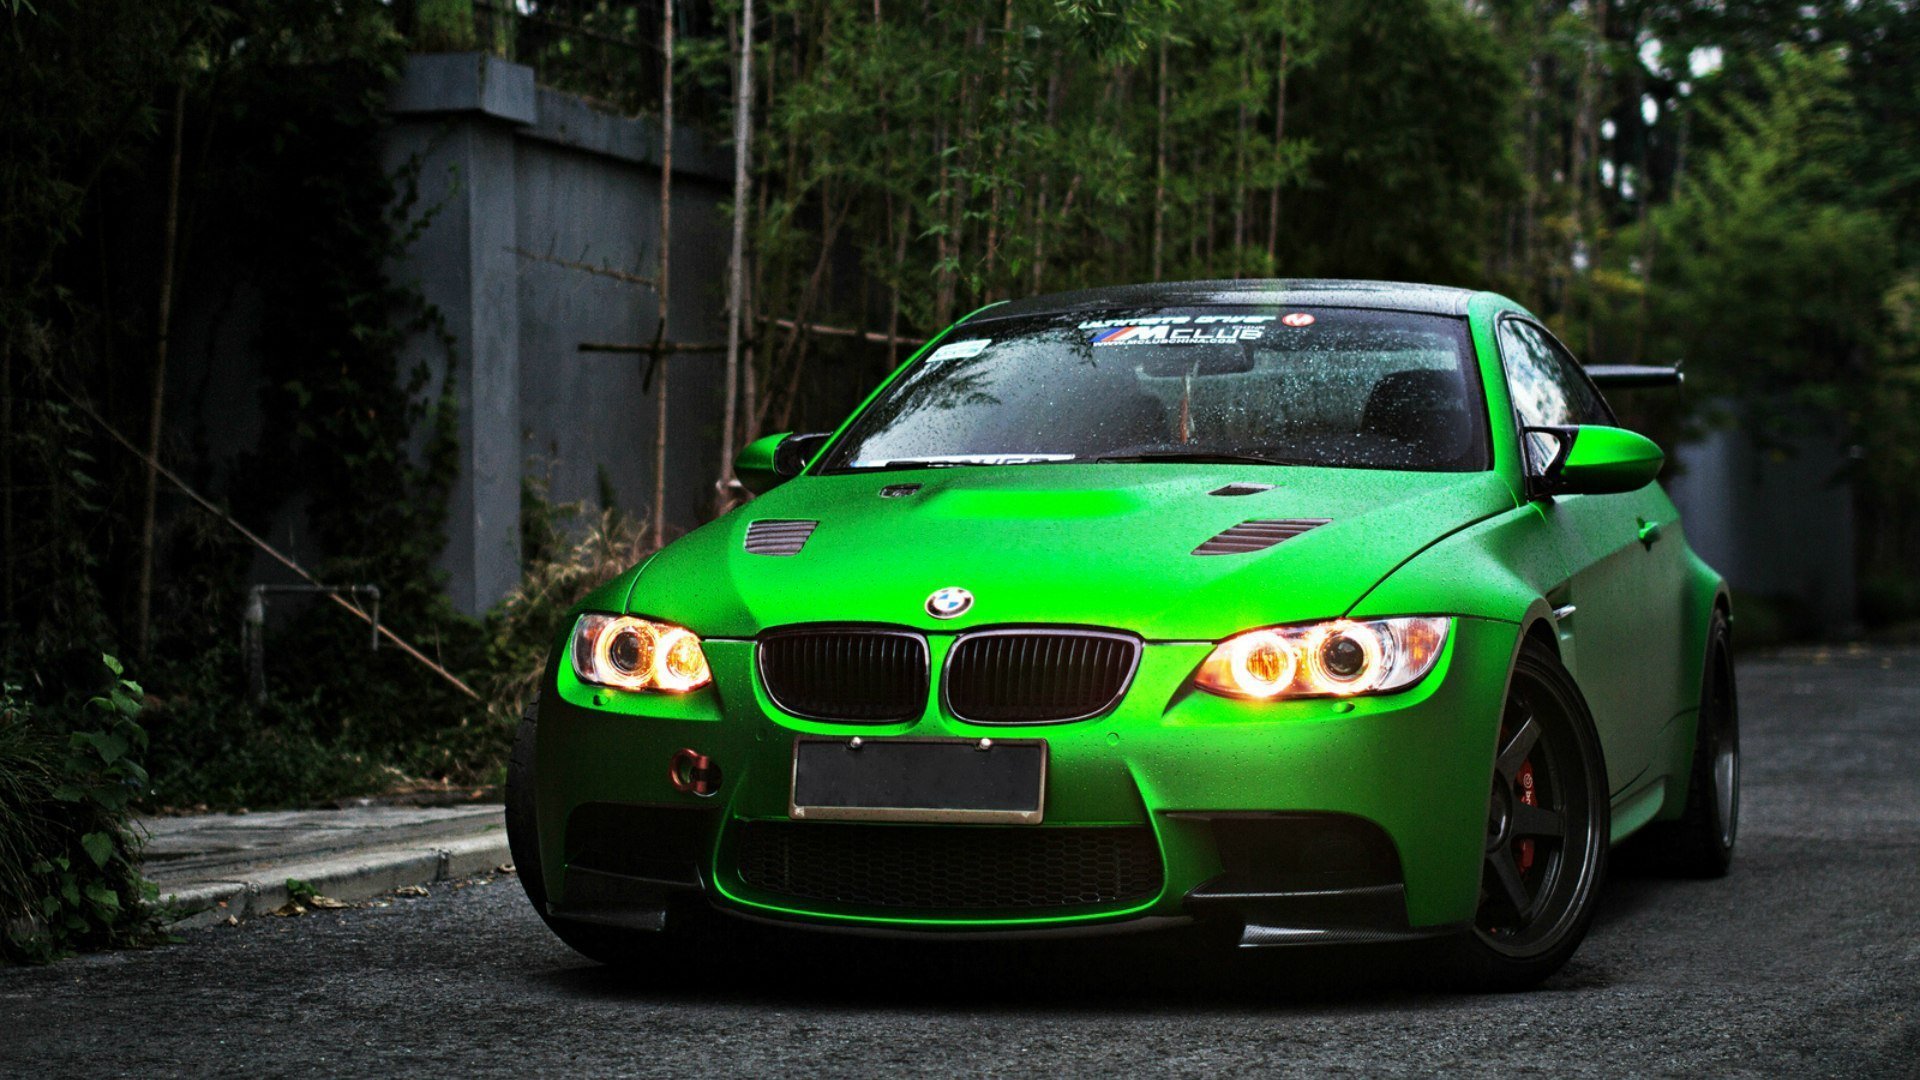 Зеленый цвет безопасности. BMW e92 зеленая. BMW m3 салатовая. BMW m3 Power зеленая. BMW m3 2005 Green.